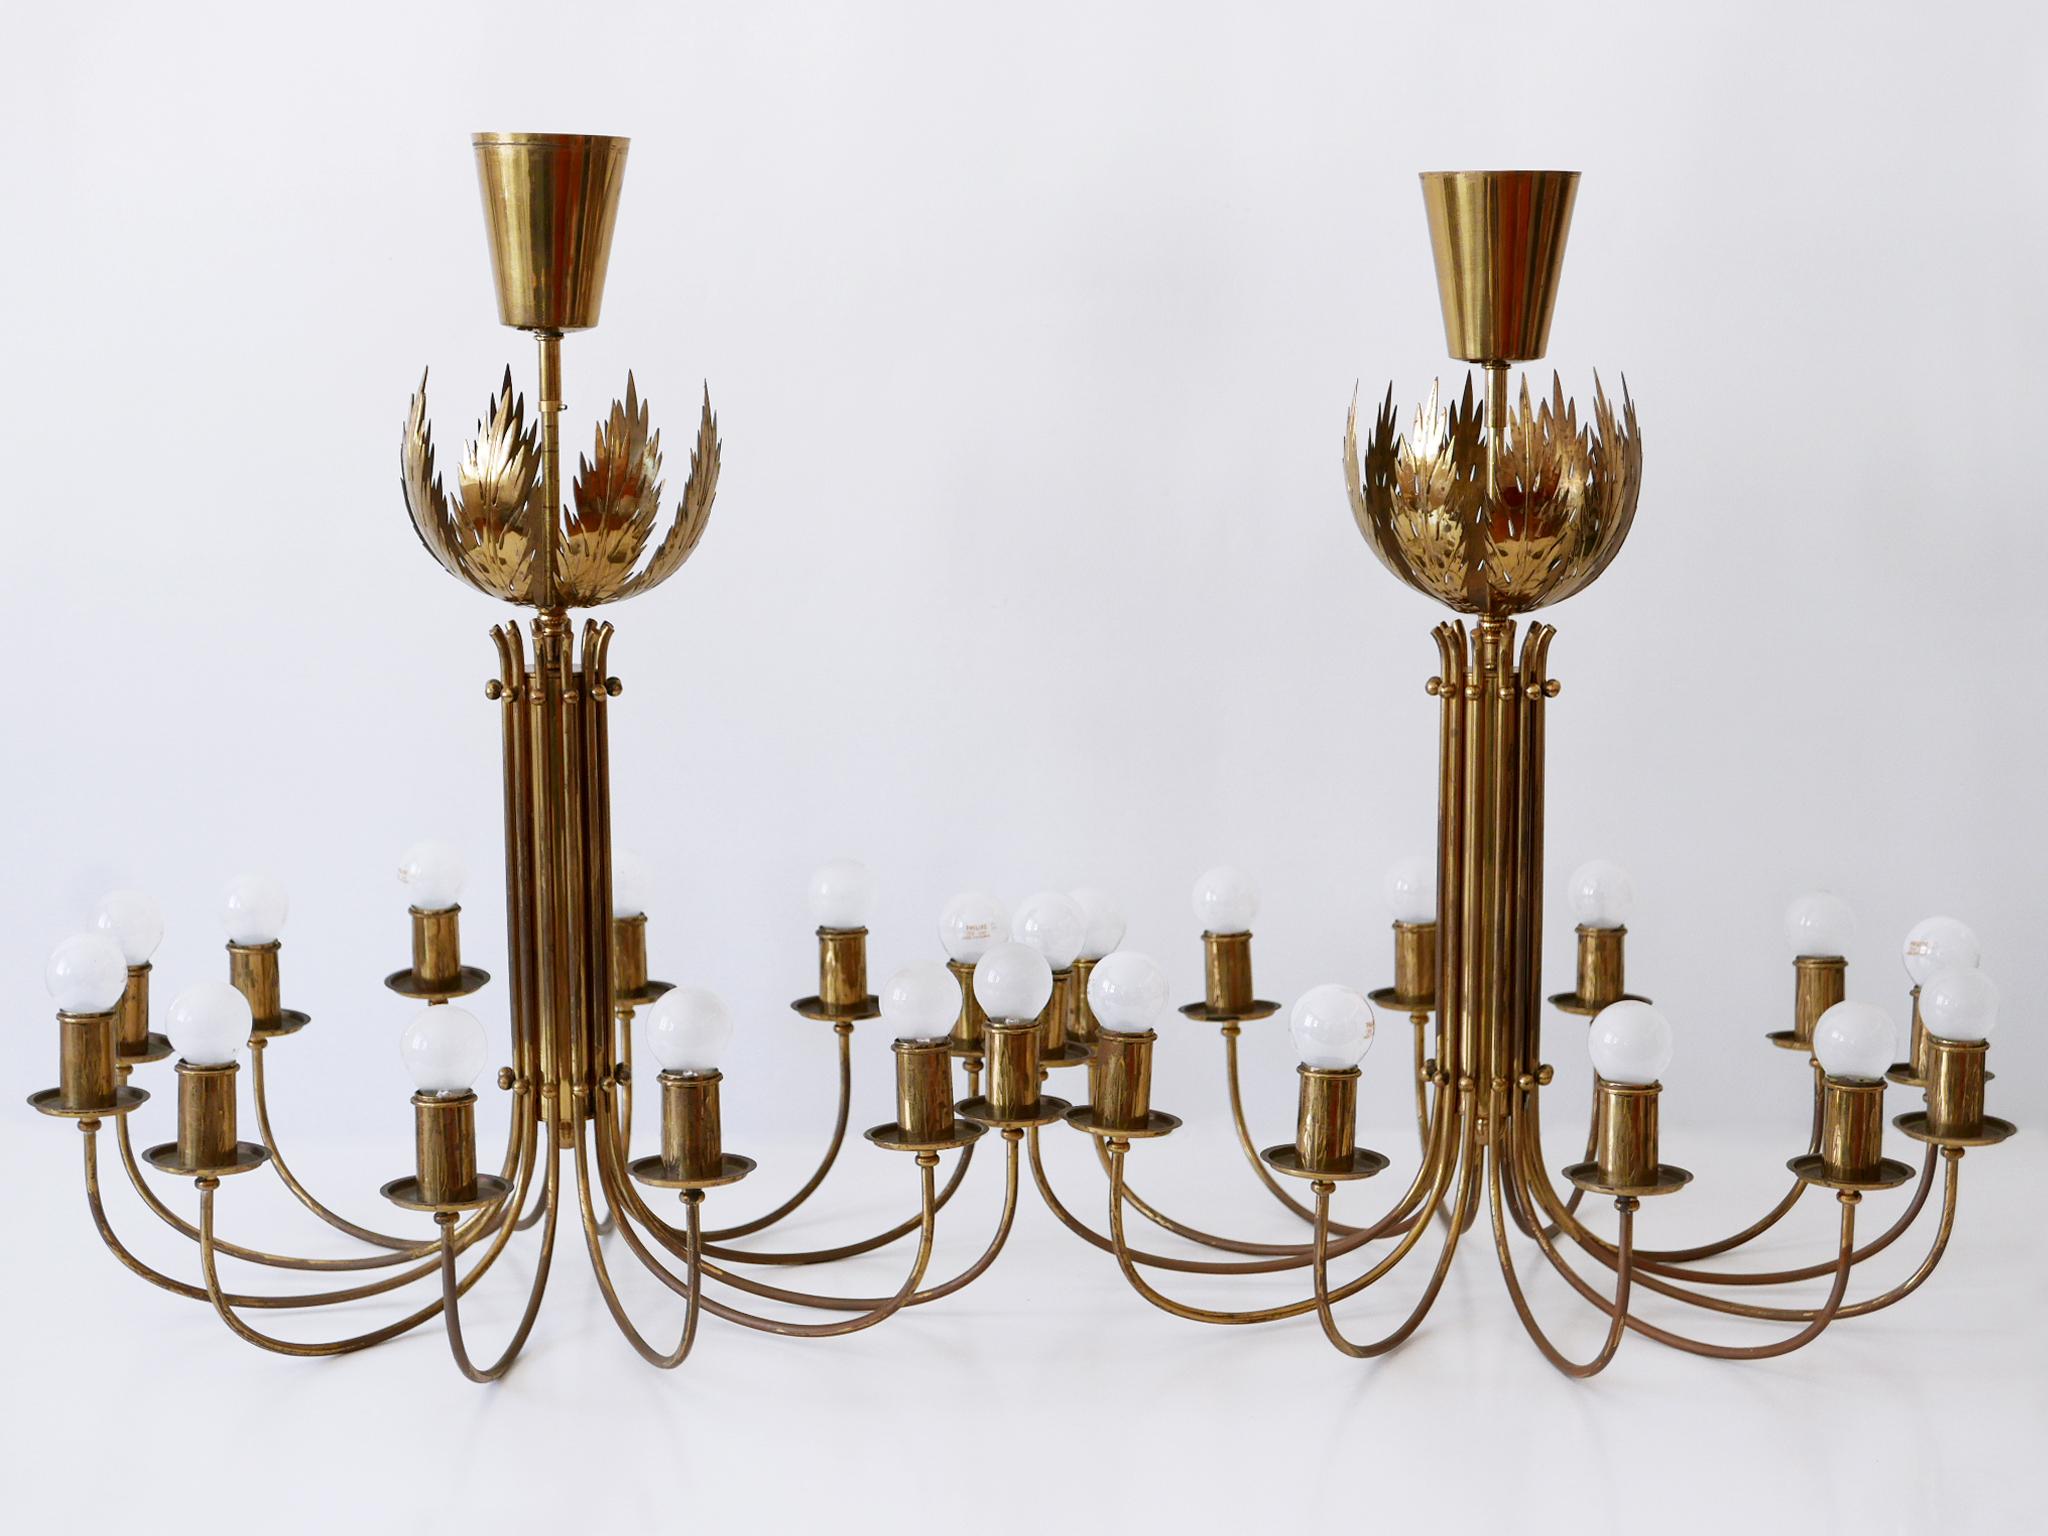 Rare 12-Armed Brass Chandeliers or Pendant Lamps by Vereinigte Werkstätten 1950s For Sale 4